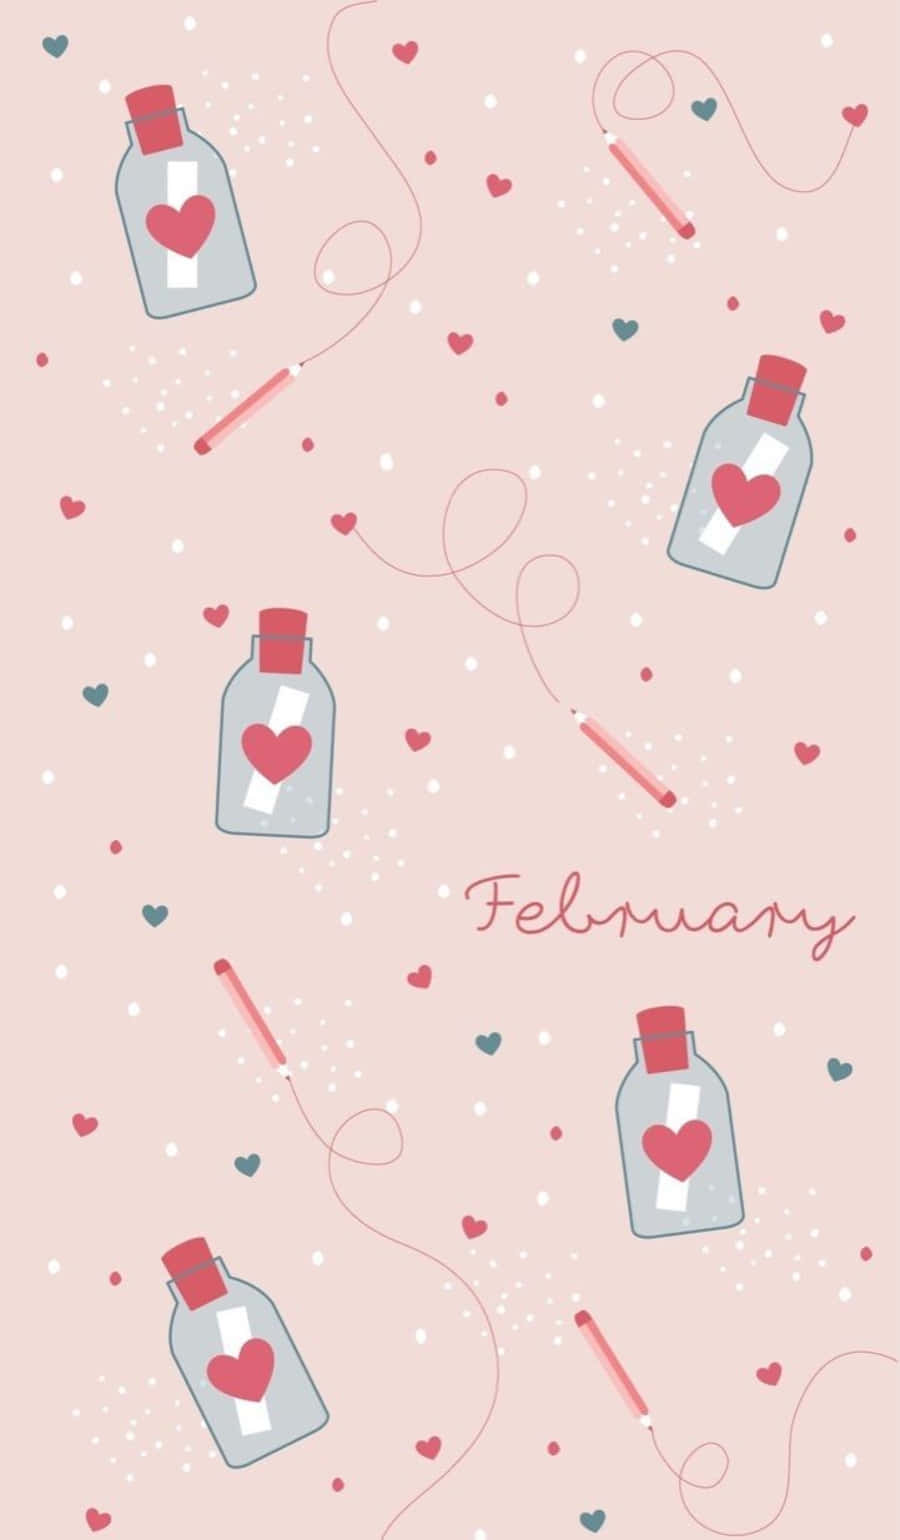 February iPhone Wallpaper with Calendar Wallpaper